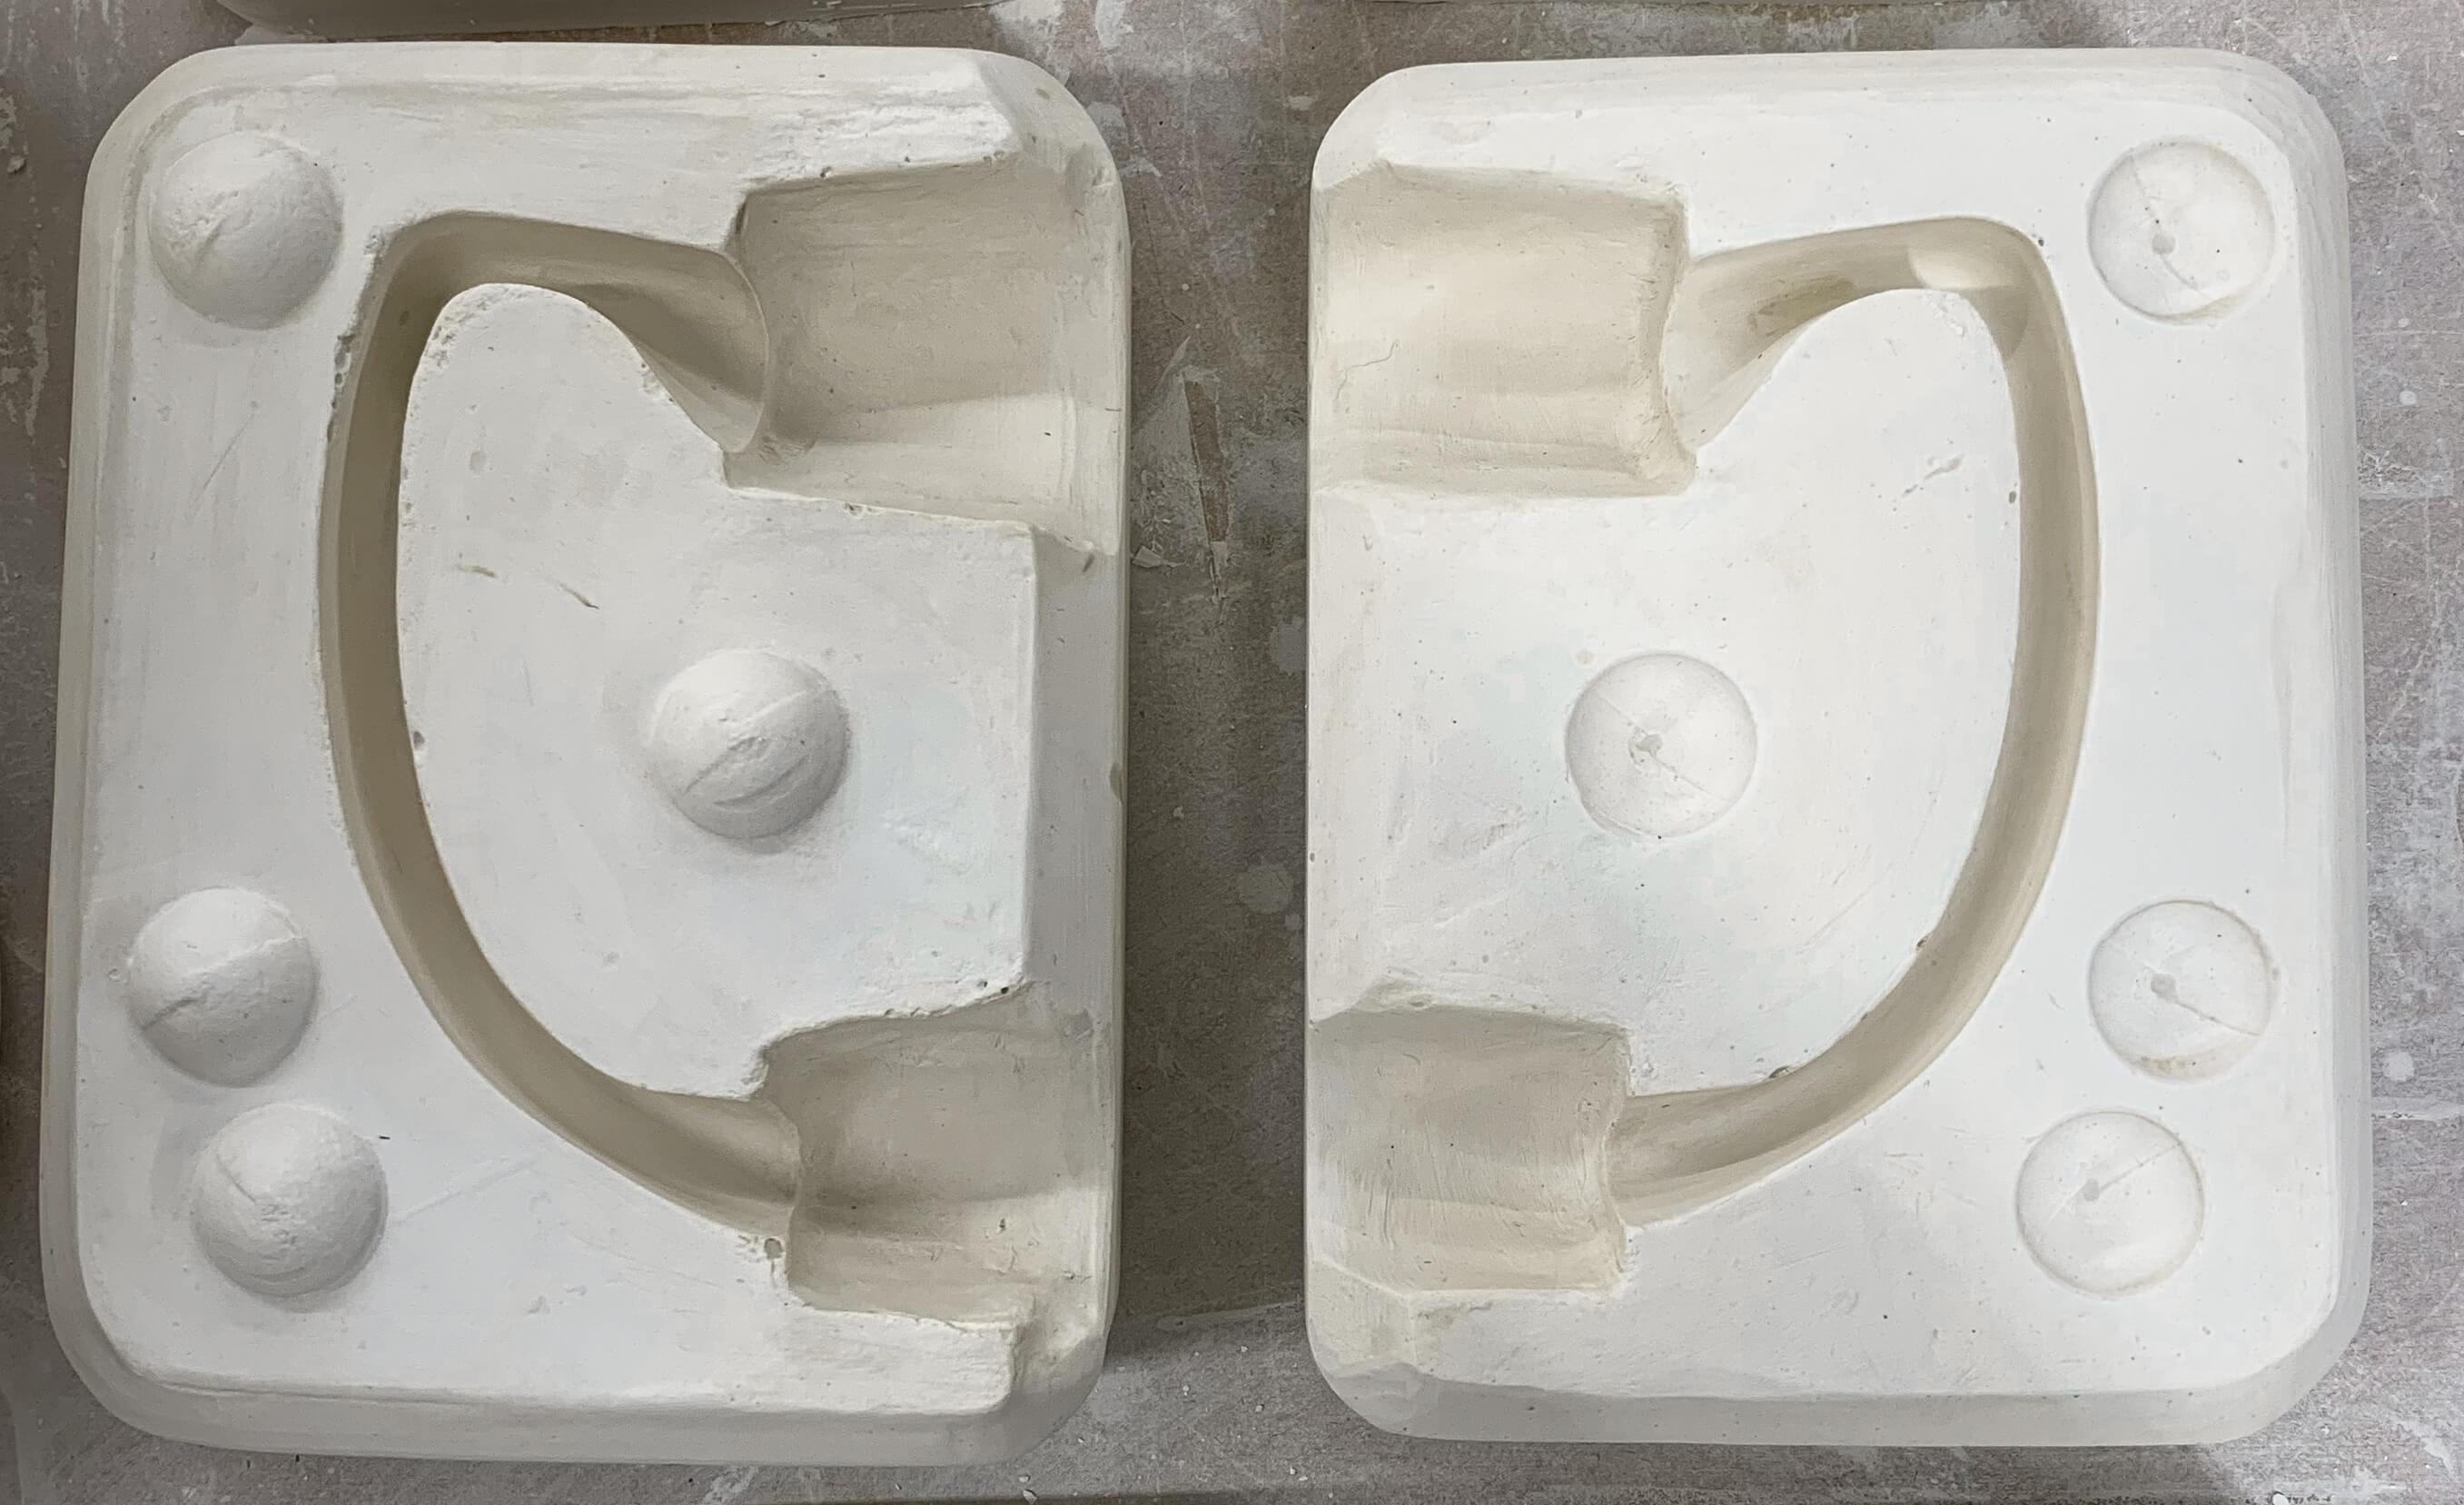 The 2 sides of the mug handle mold